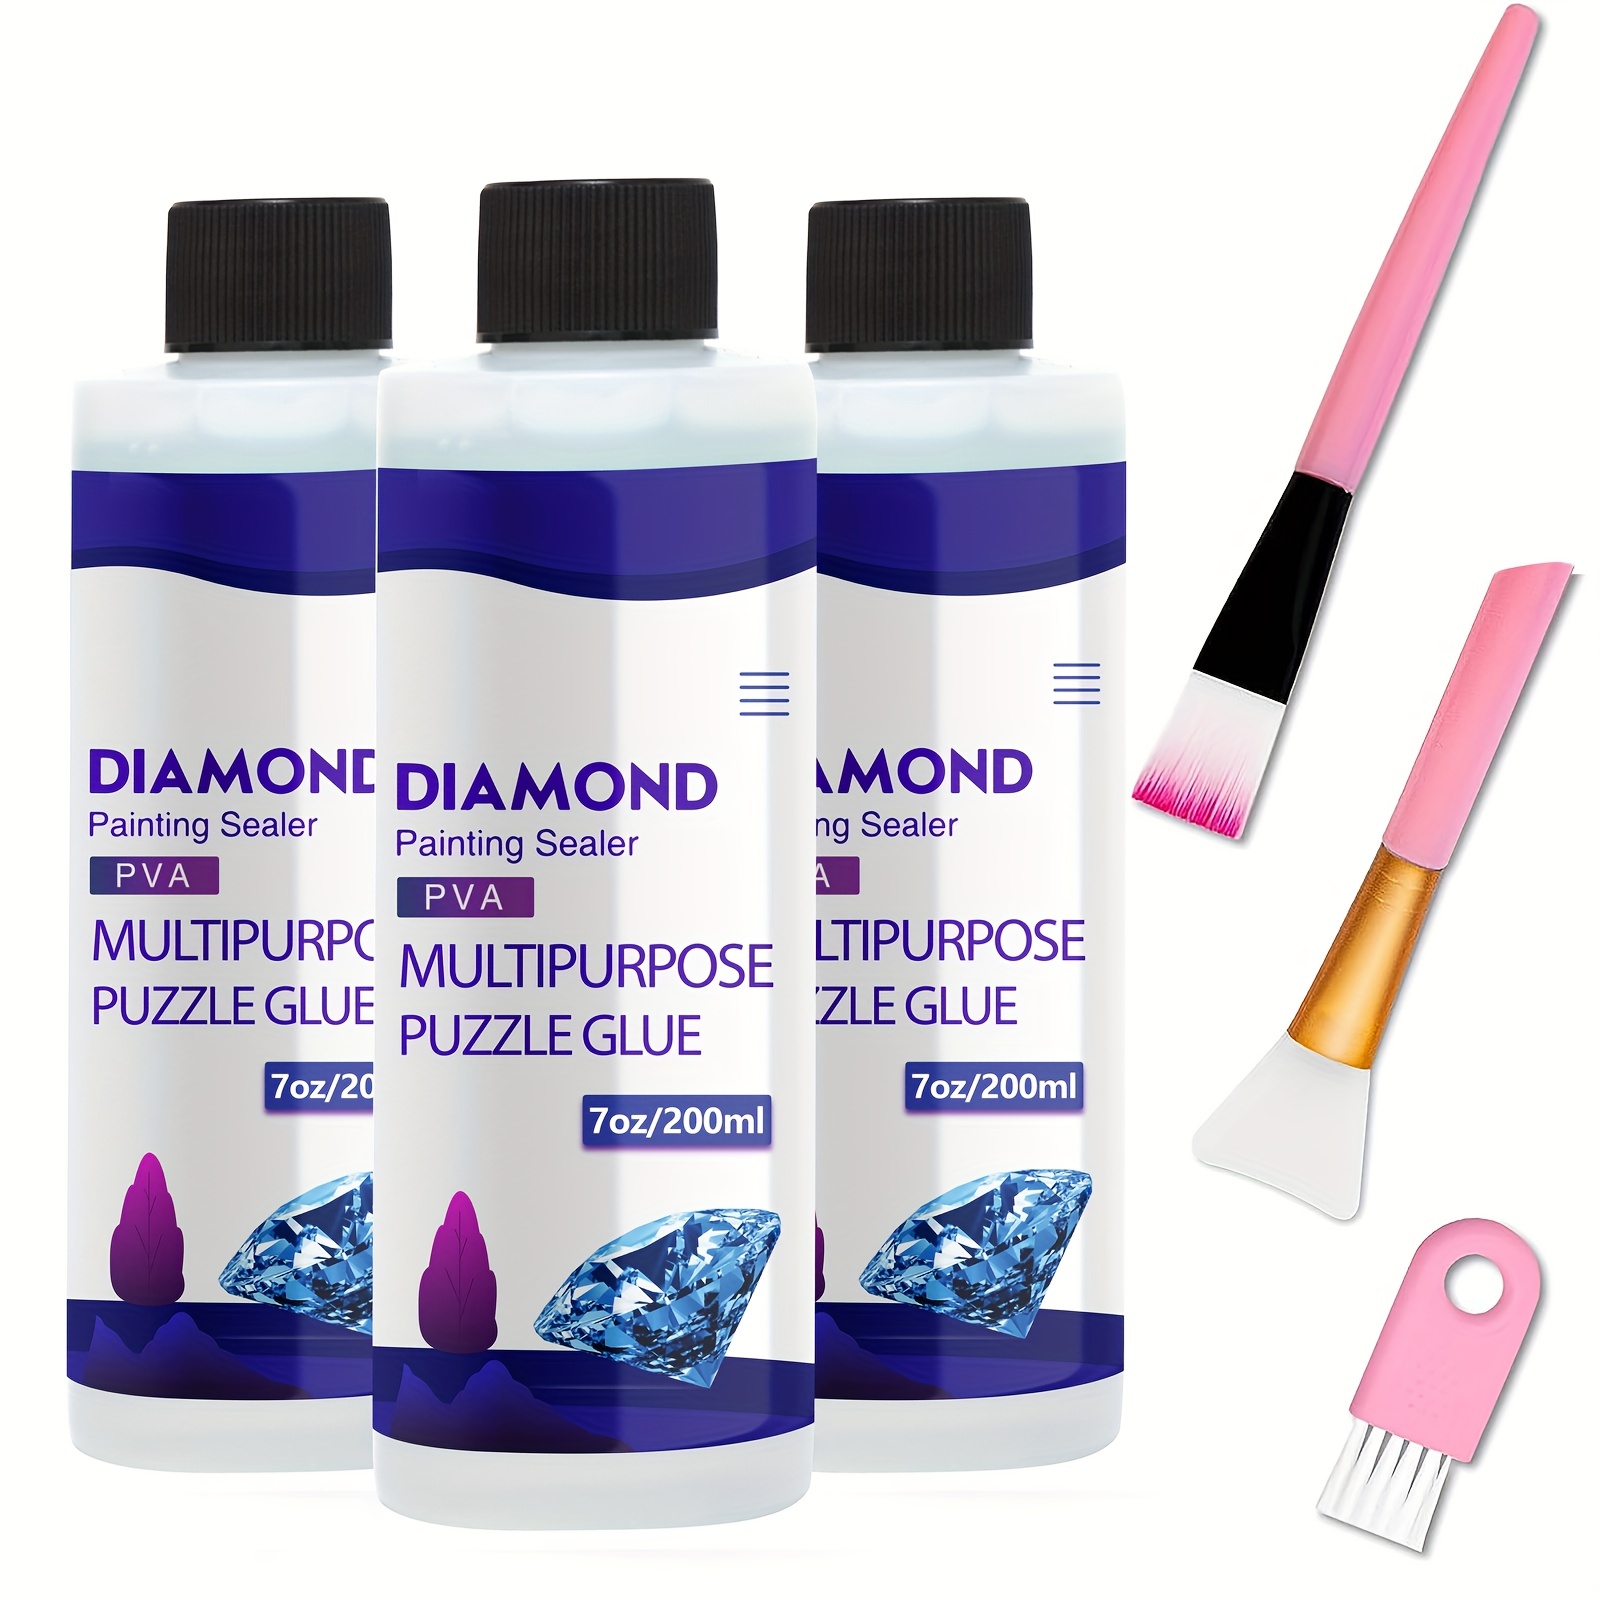 Diamond Painting Sealer 120ML, 5D Diamond Art Glue Sealer with Glue  Scraper, Diamond Painting Glue Accessories, Permanent Hold & Shine Effect  Sealer